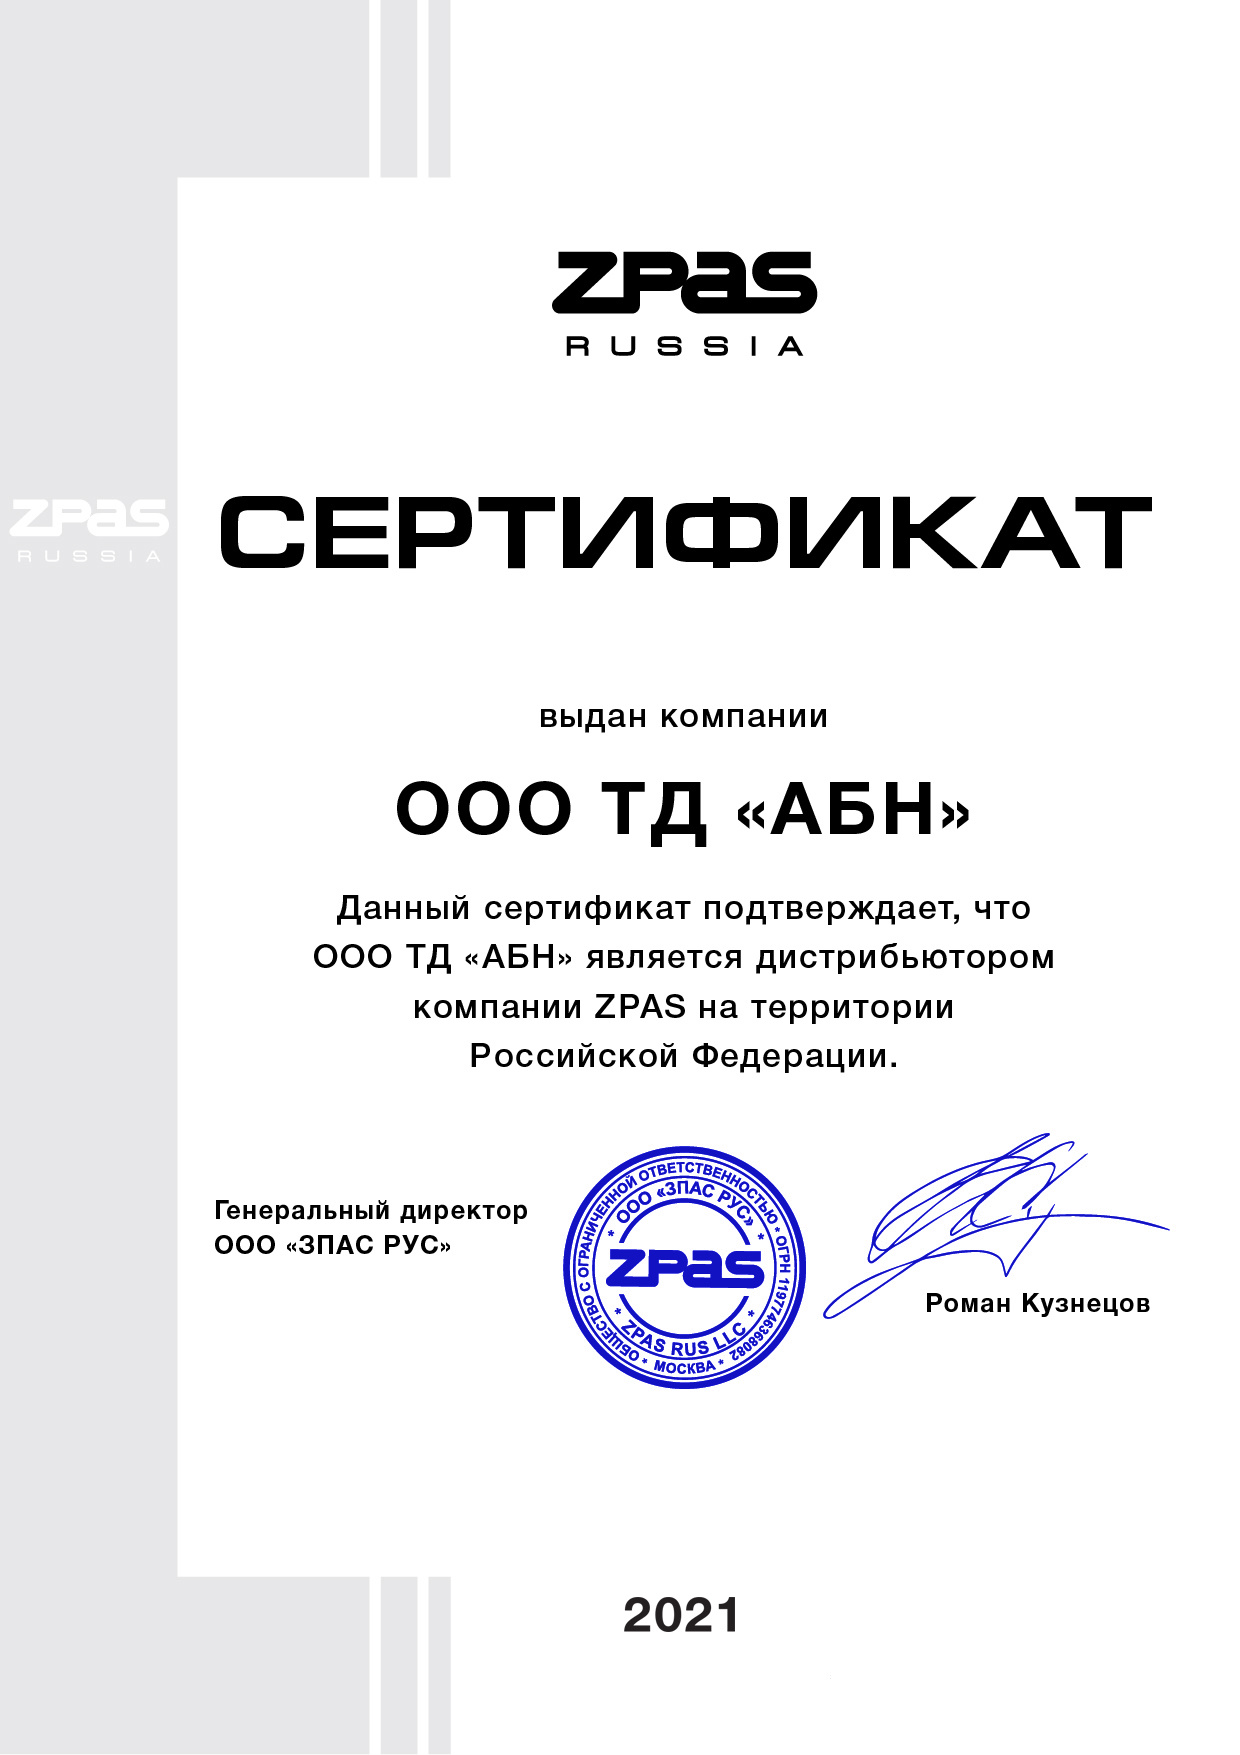 Сертификат Zpas